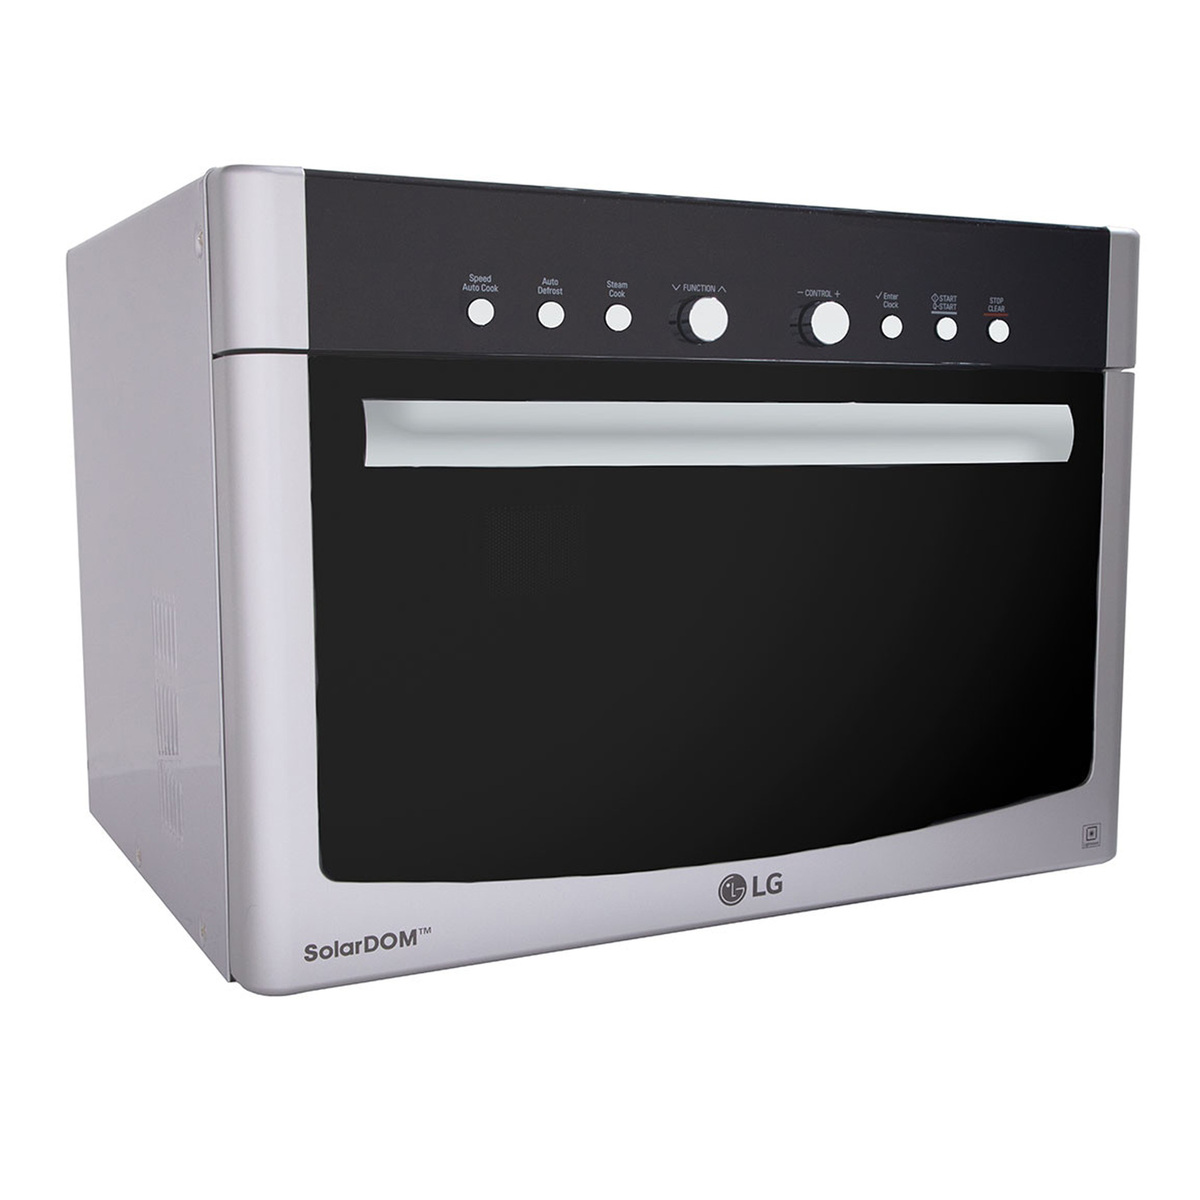 LG Solardom Convection Microwave Oven, 38 L, 1650 W, MA3882QC